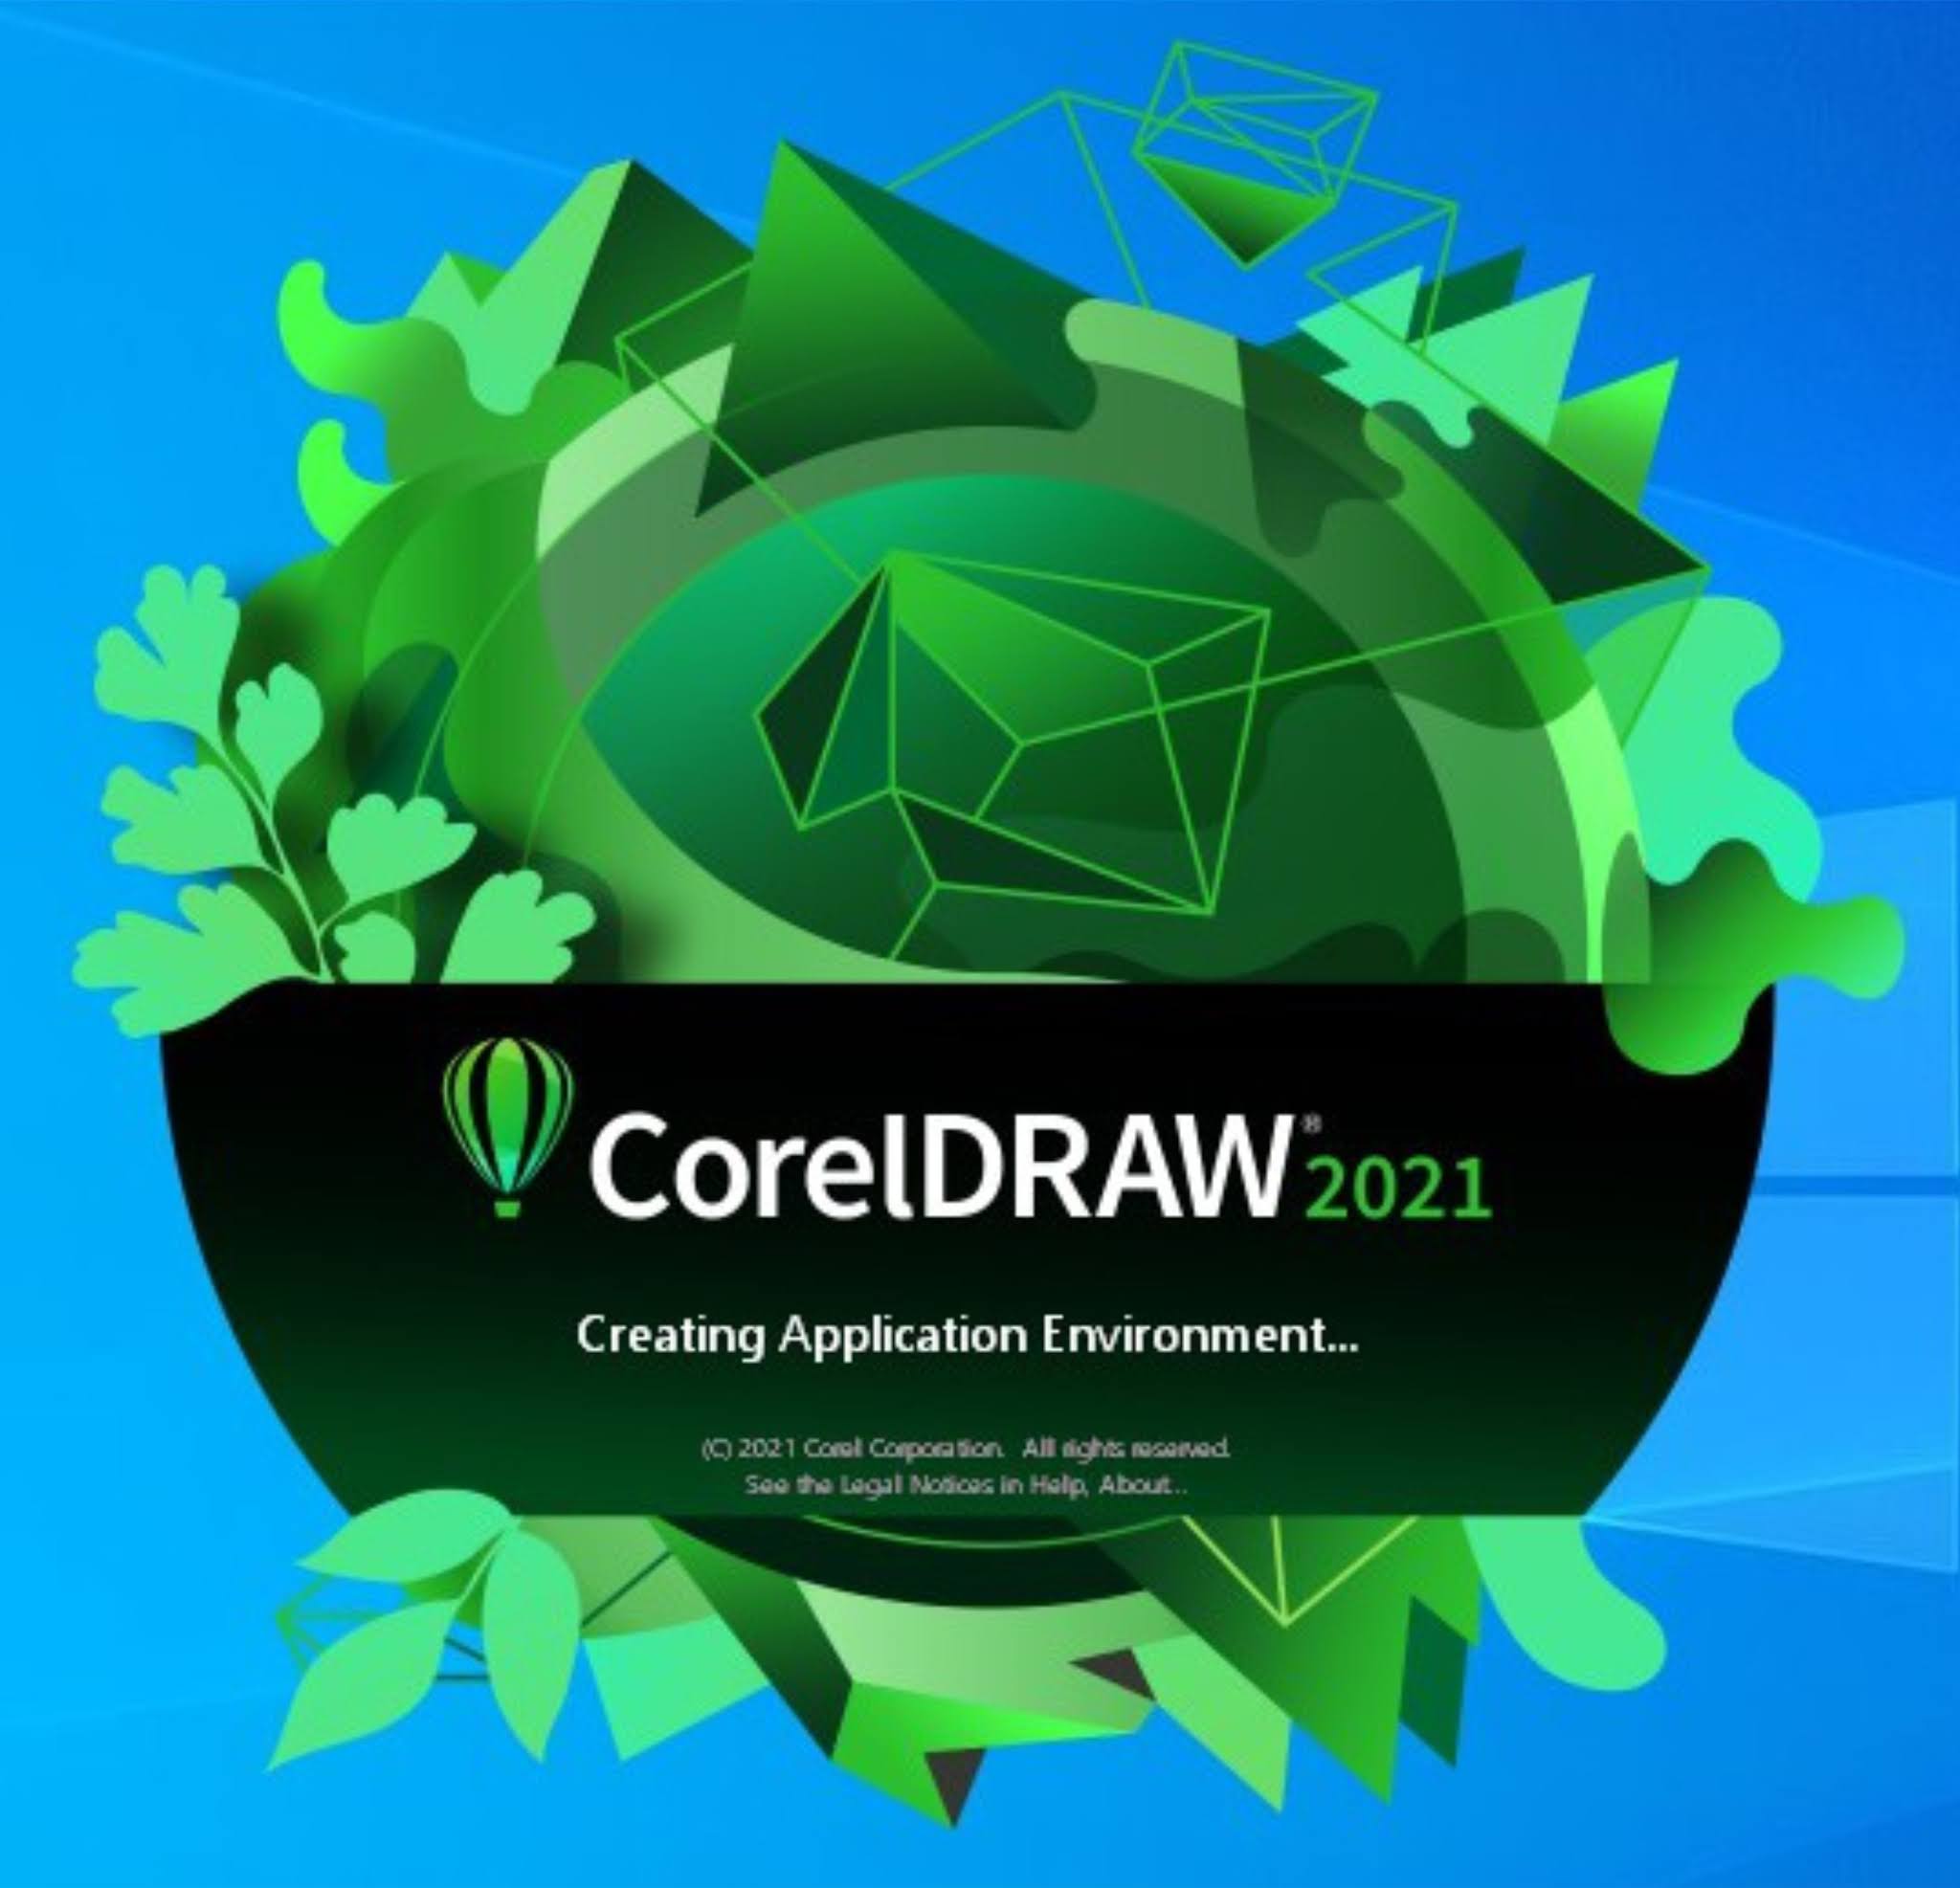 coreldraw 2021 free download full version with crack 32-bit